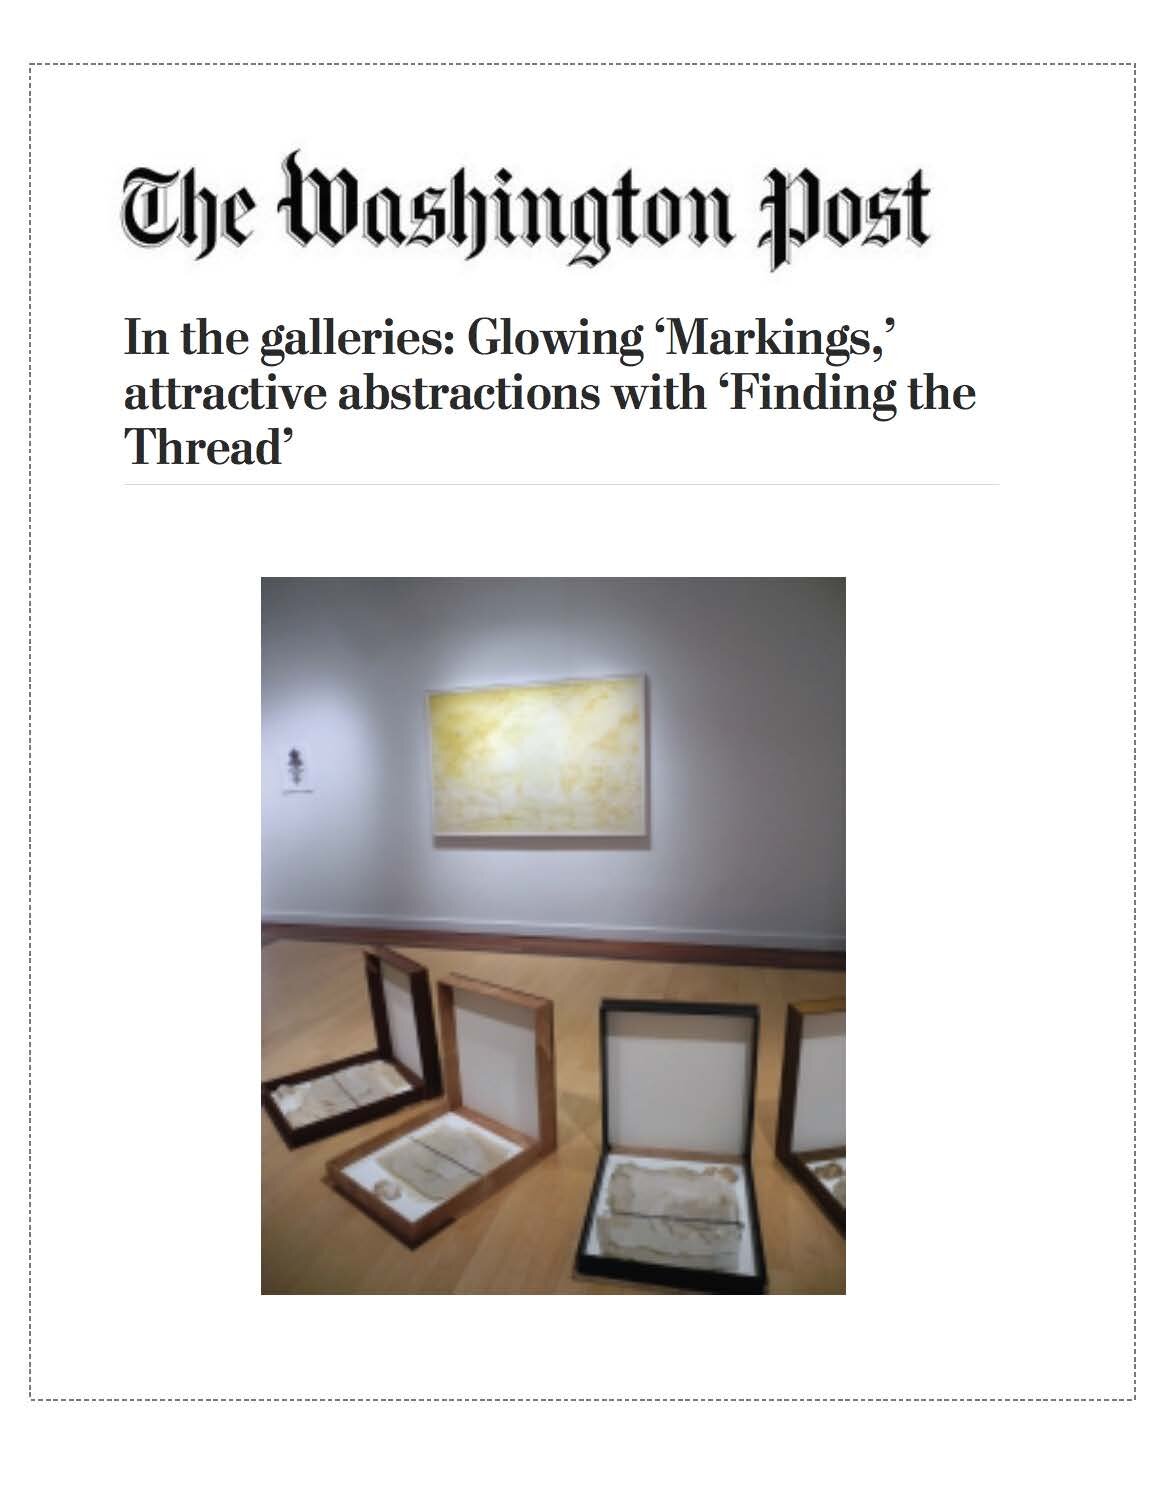 Washington Post_Page.jpg